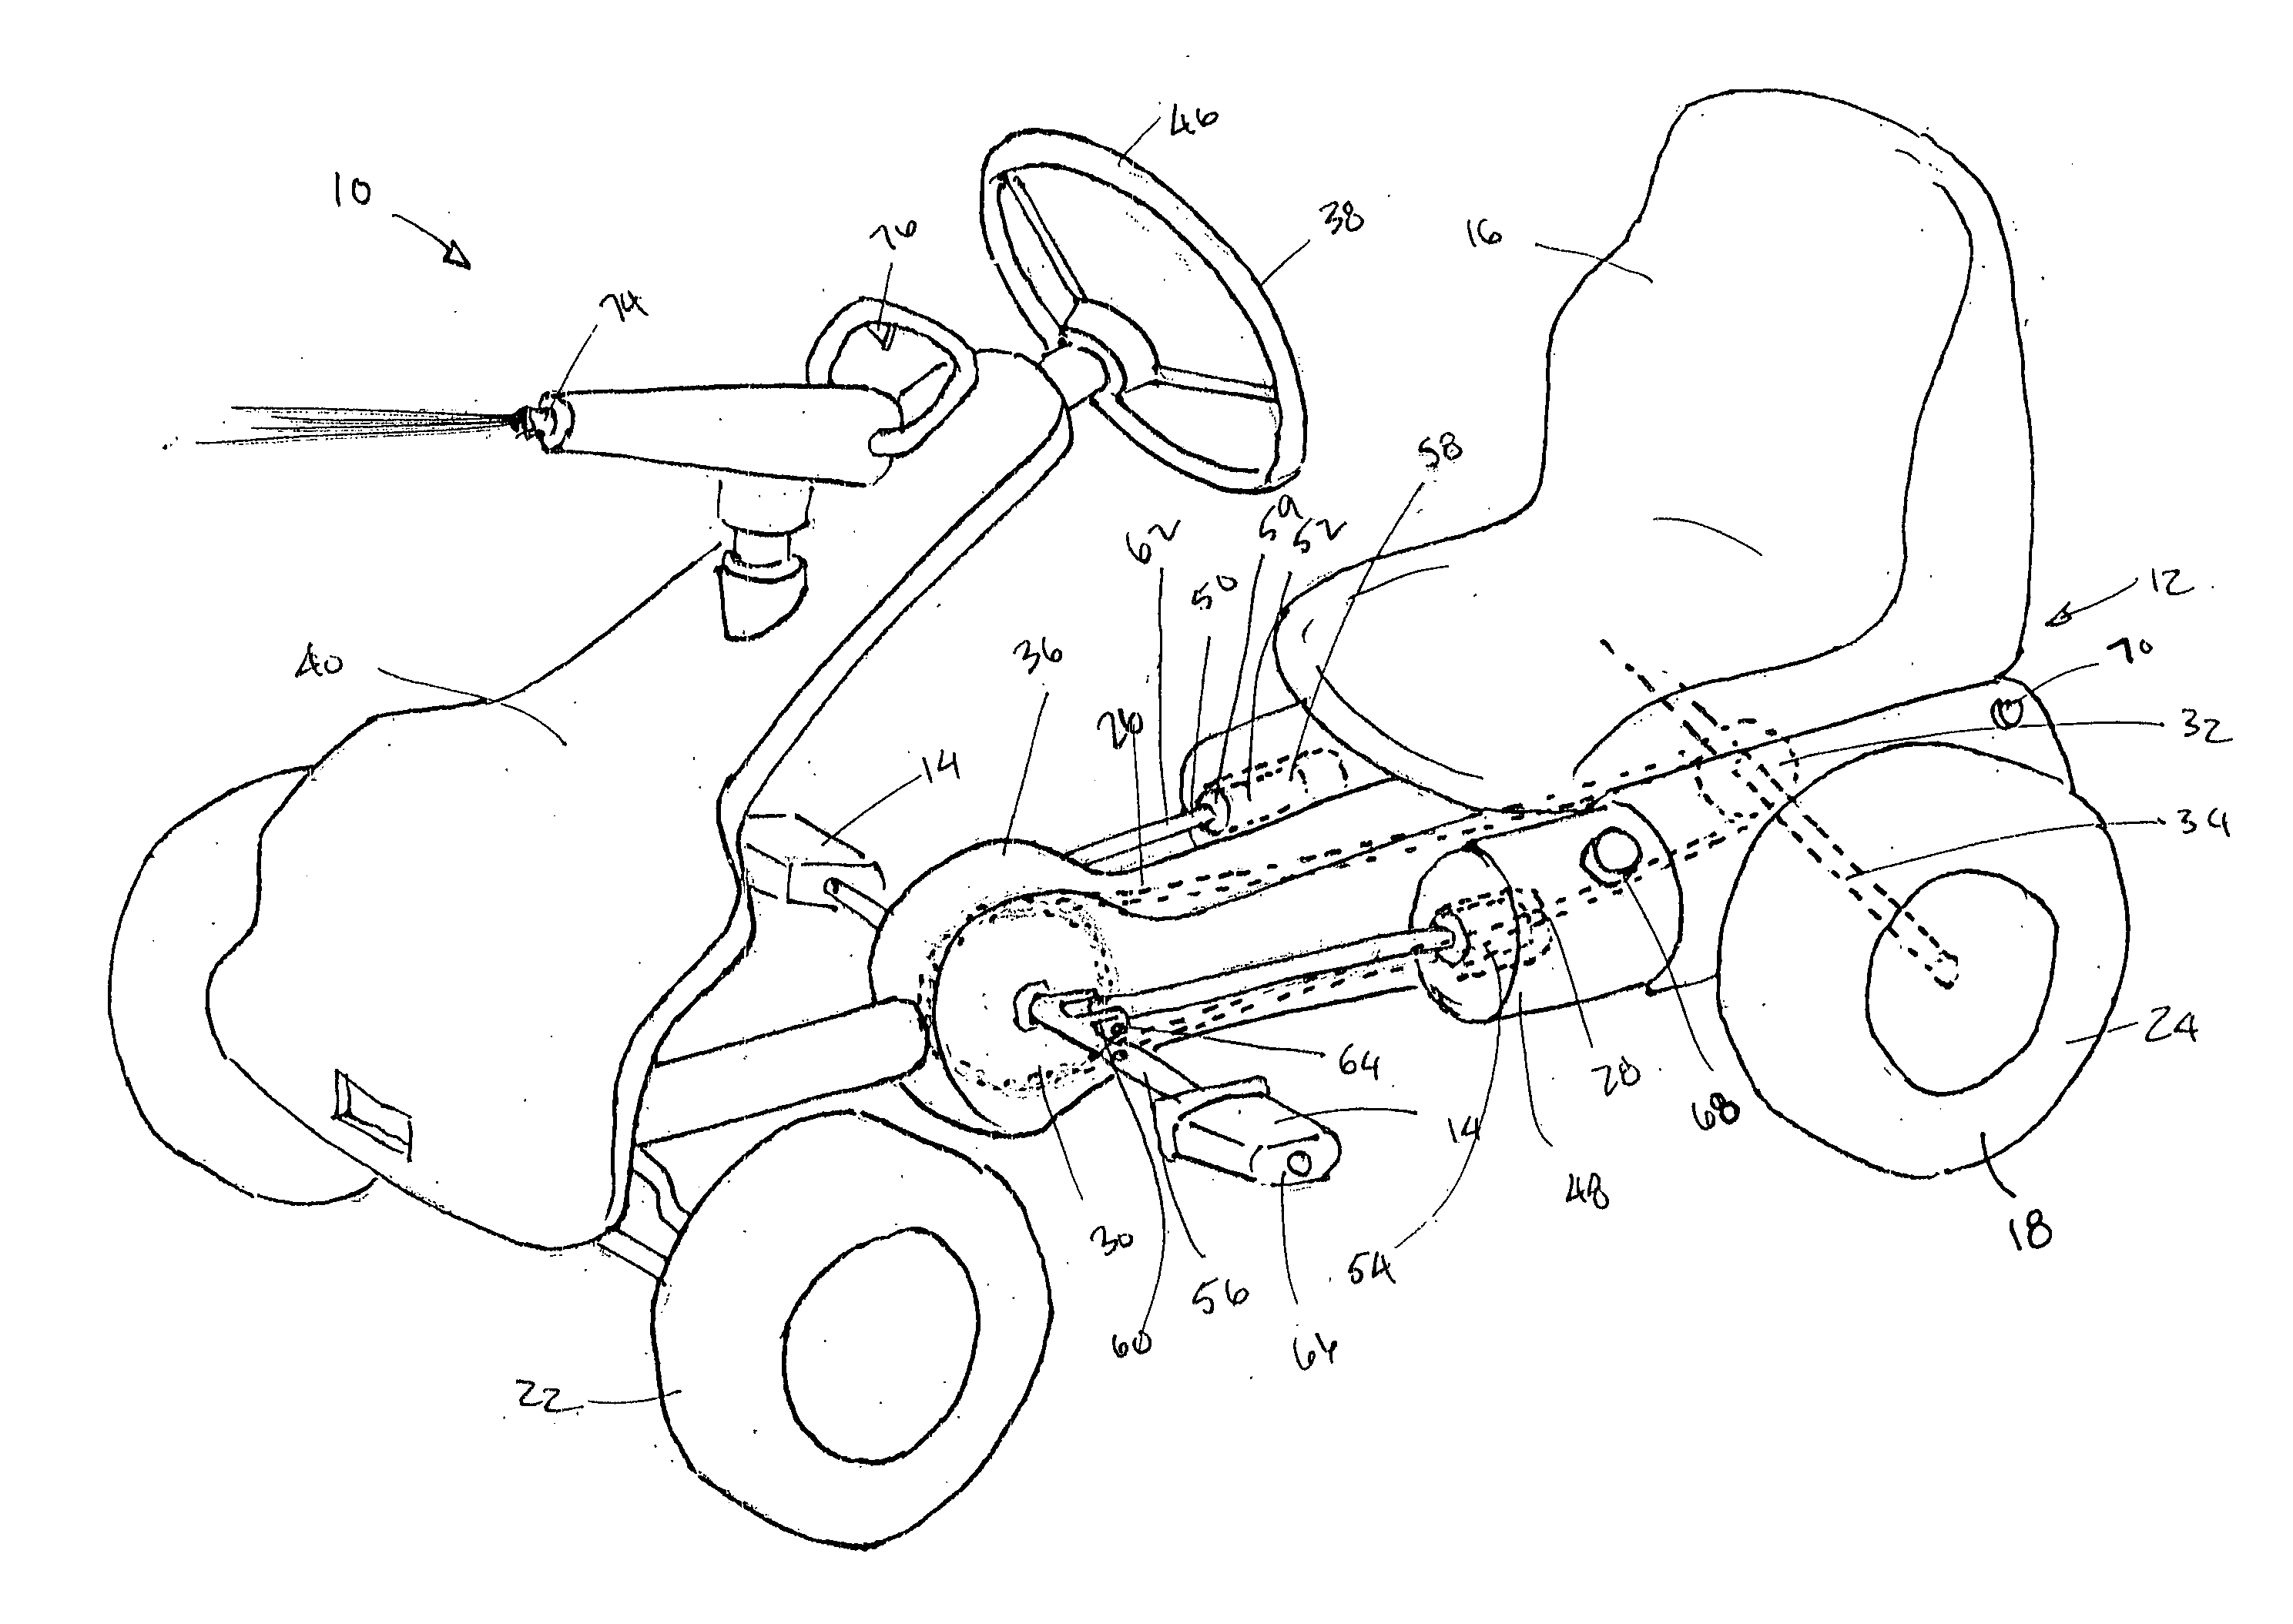 Pedal-operated fluid dispensing apparatus